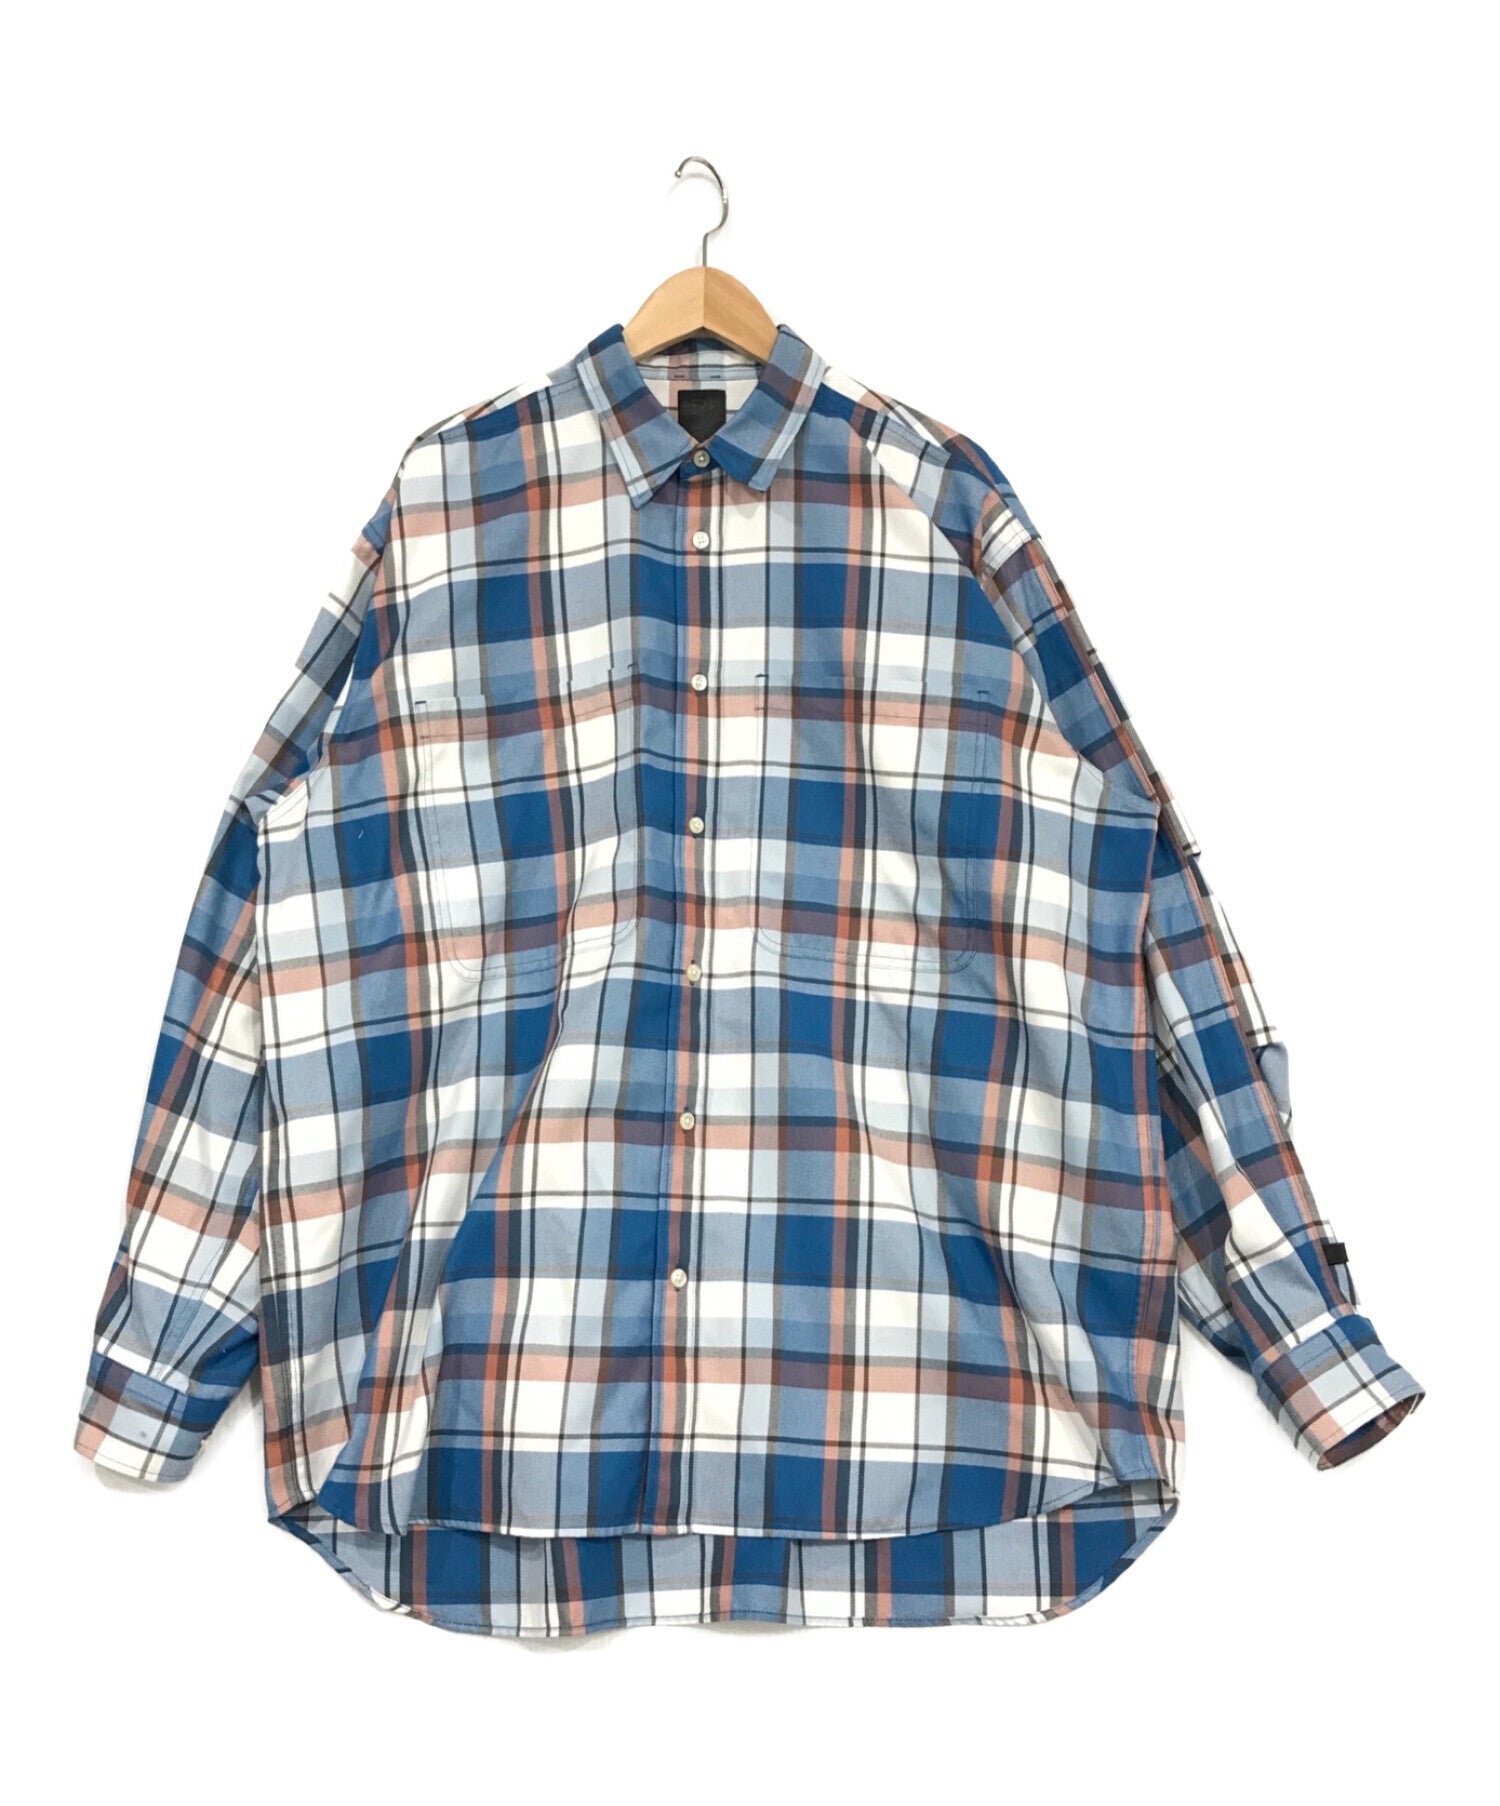 DAIWA PIER39 Tech Work Shirts Flannel Plaids BE-88022 | Archive